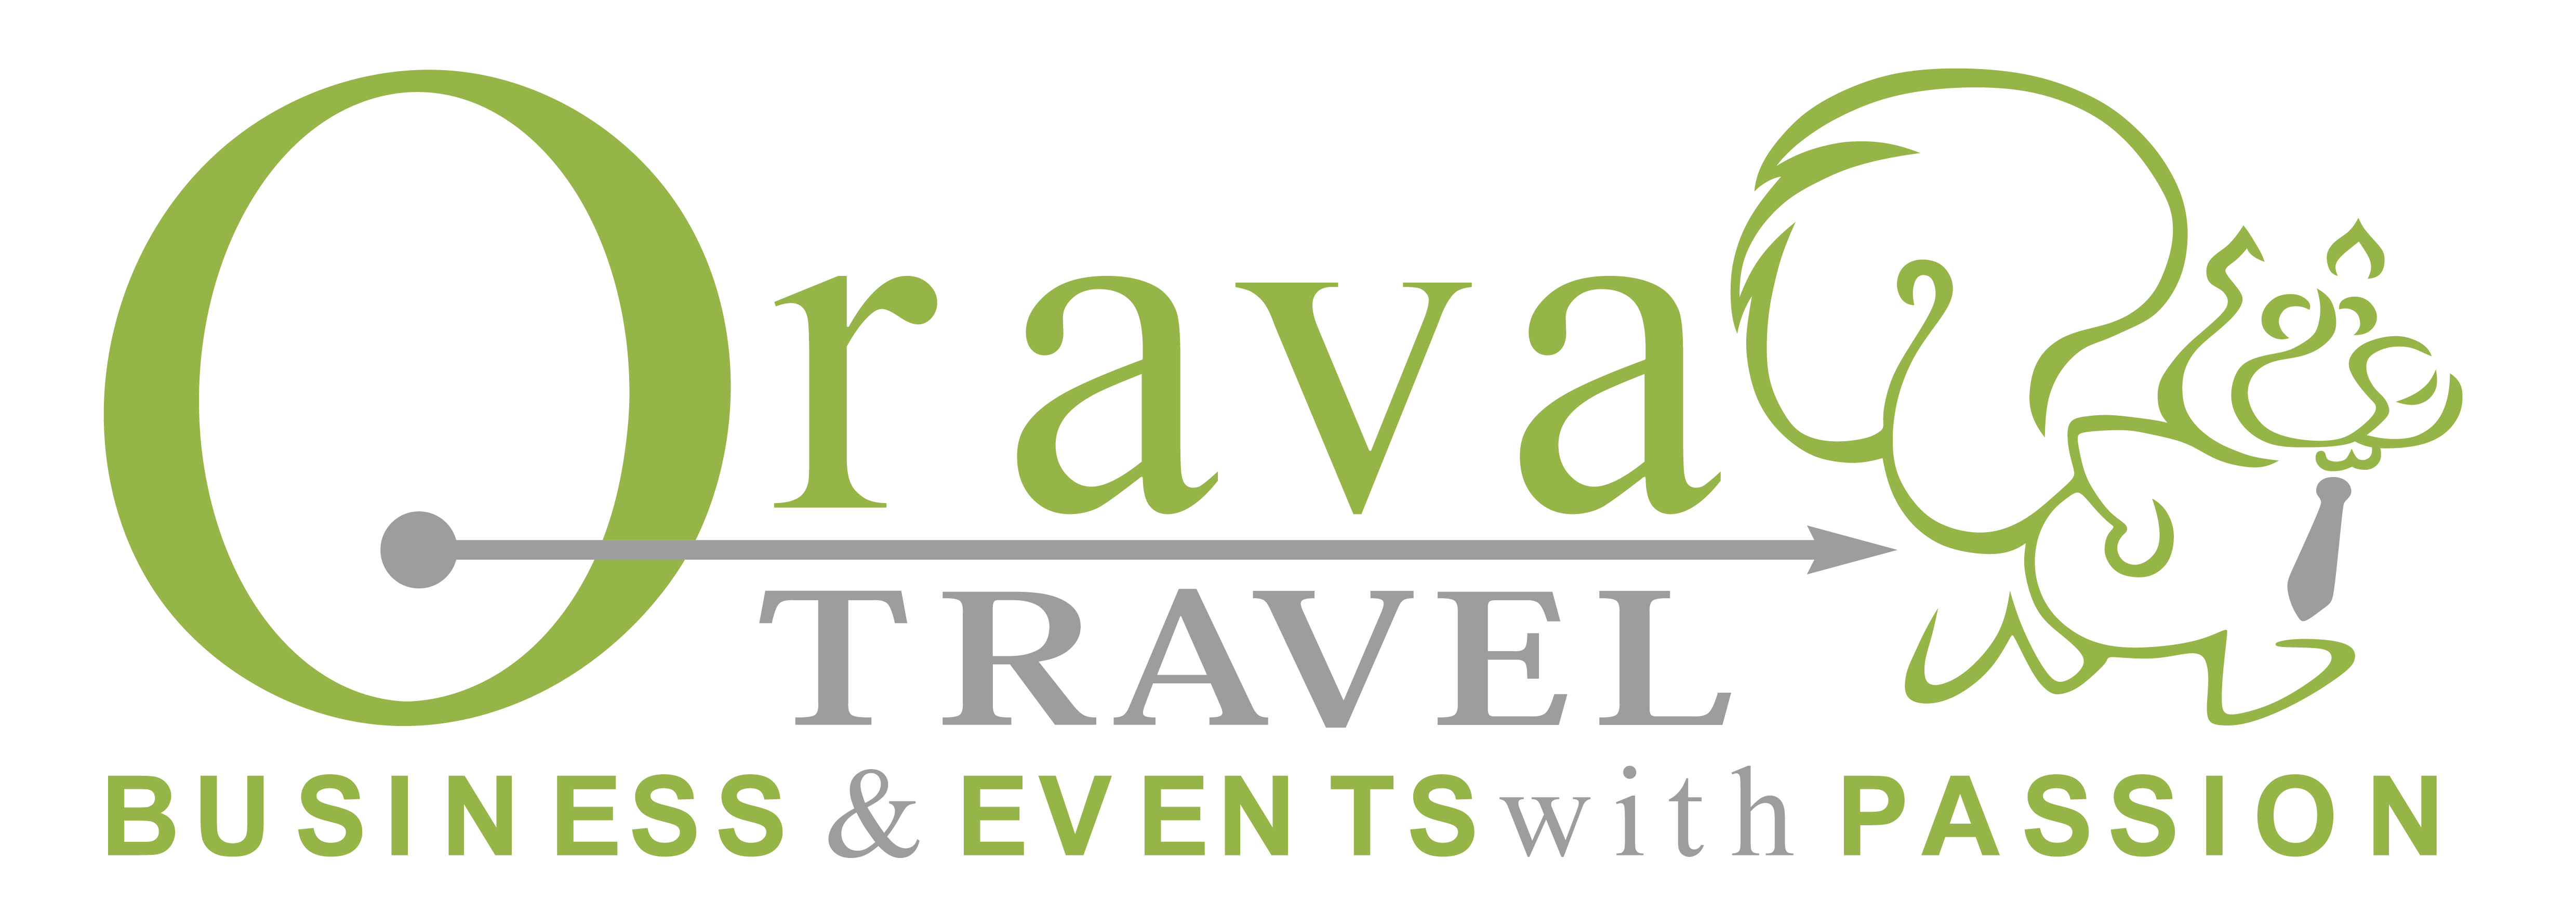 Orava Travel